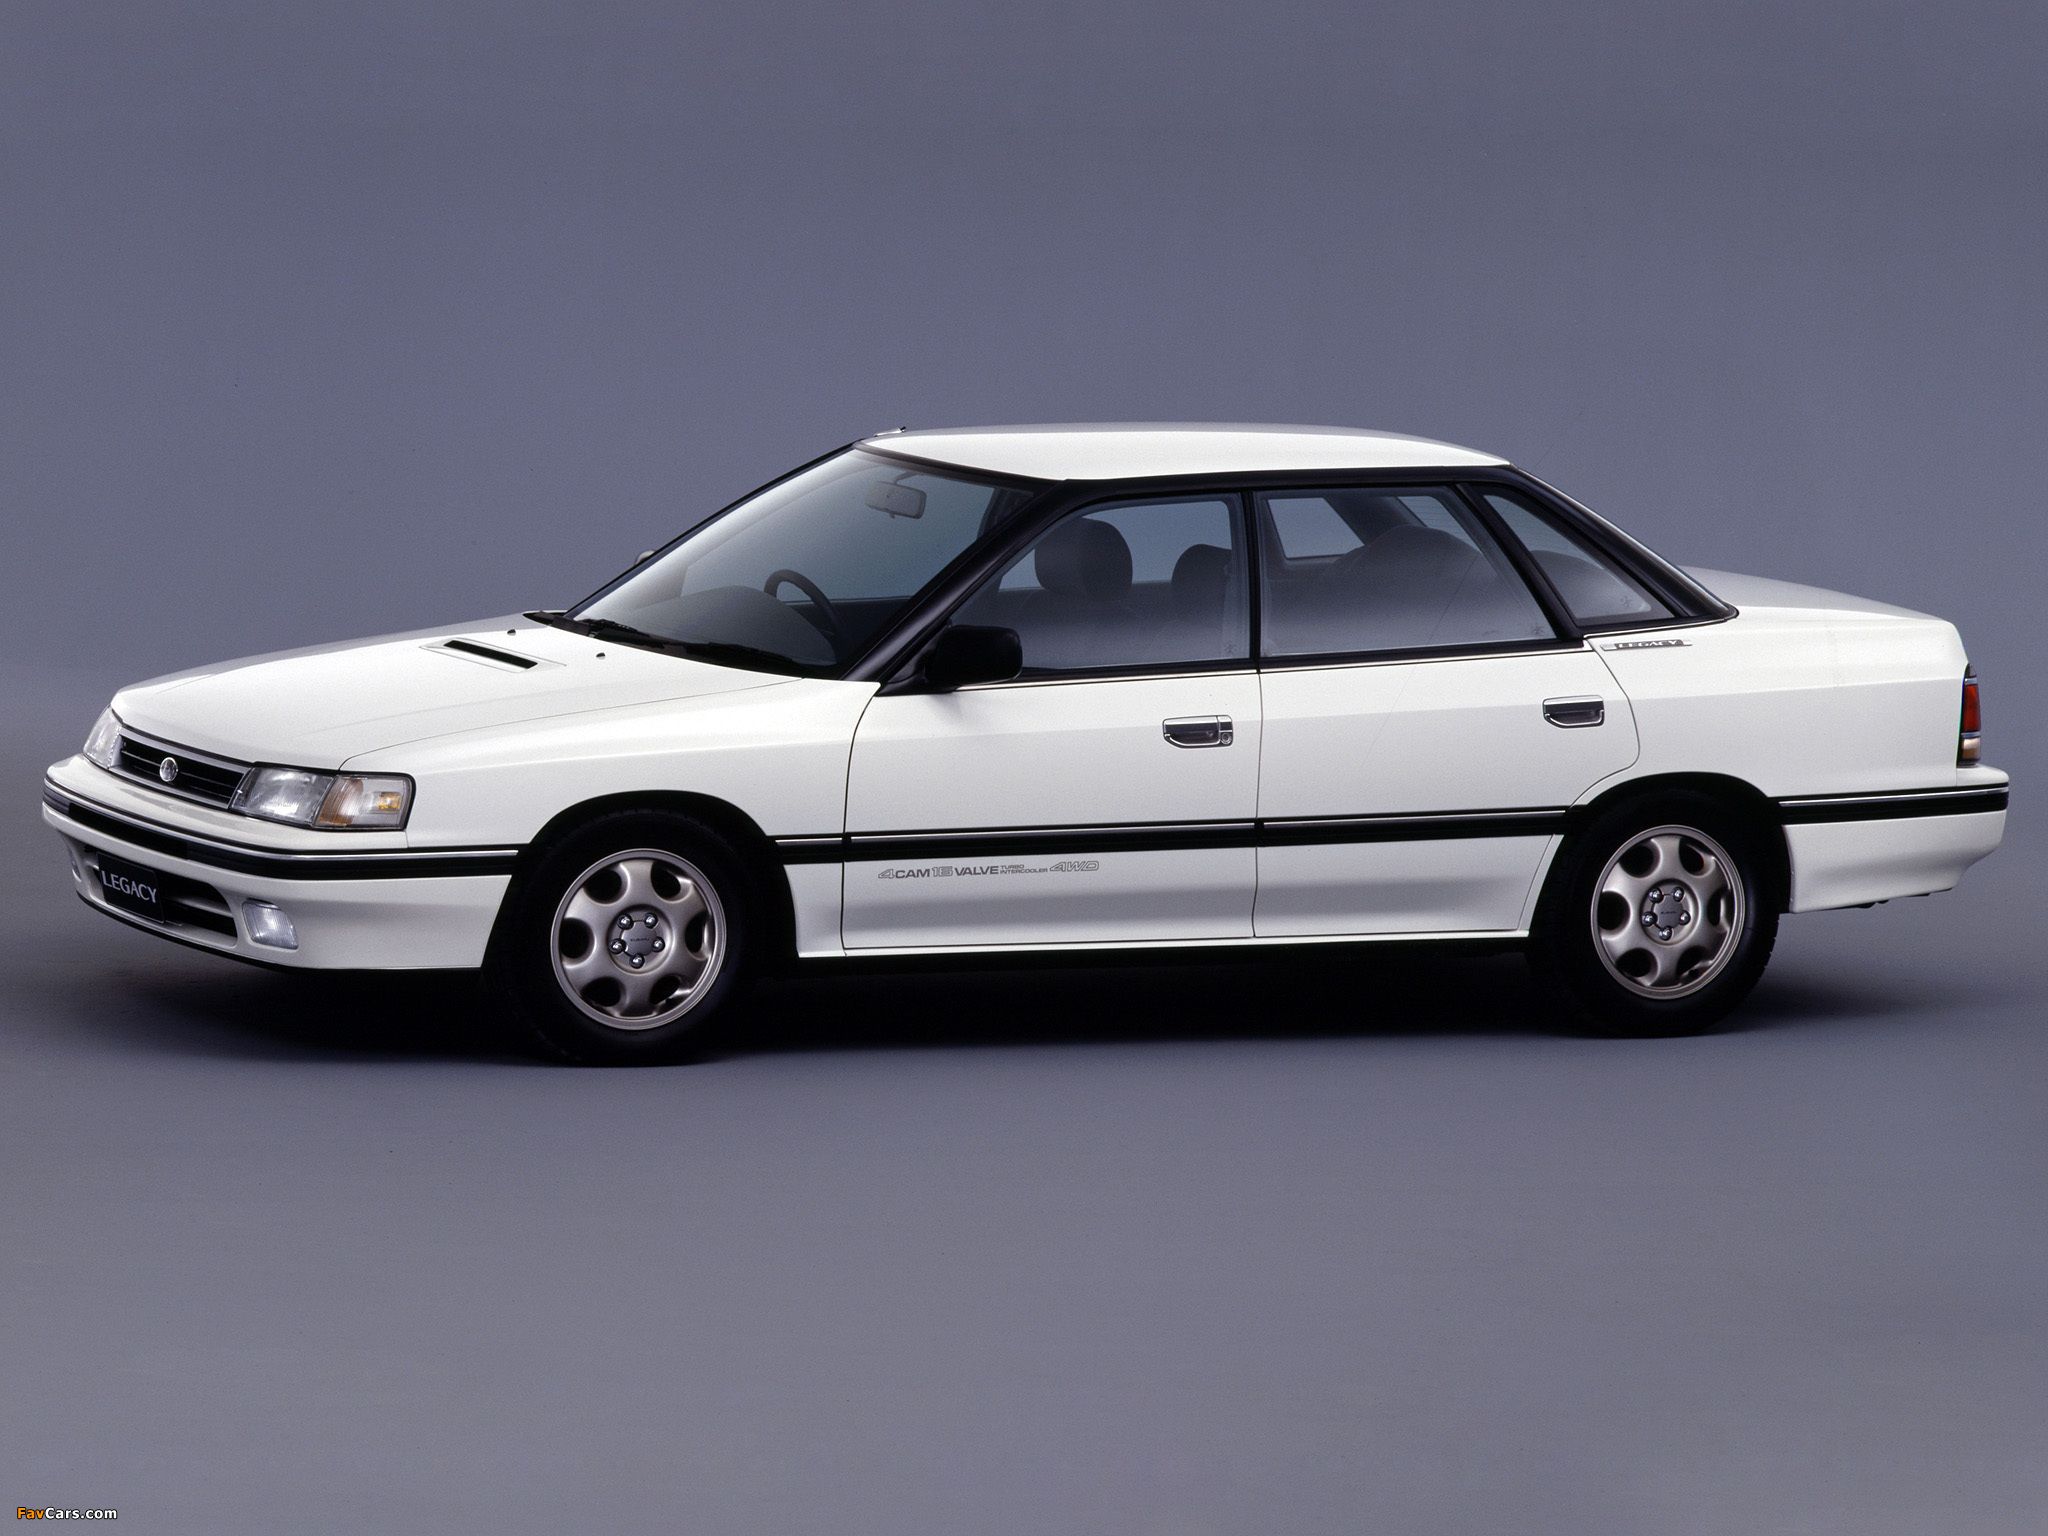 1990 Subaru Legacy Wagon LS 0-60 Times, Top Speed, Specs, Quarter Mile